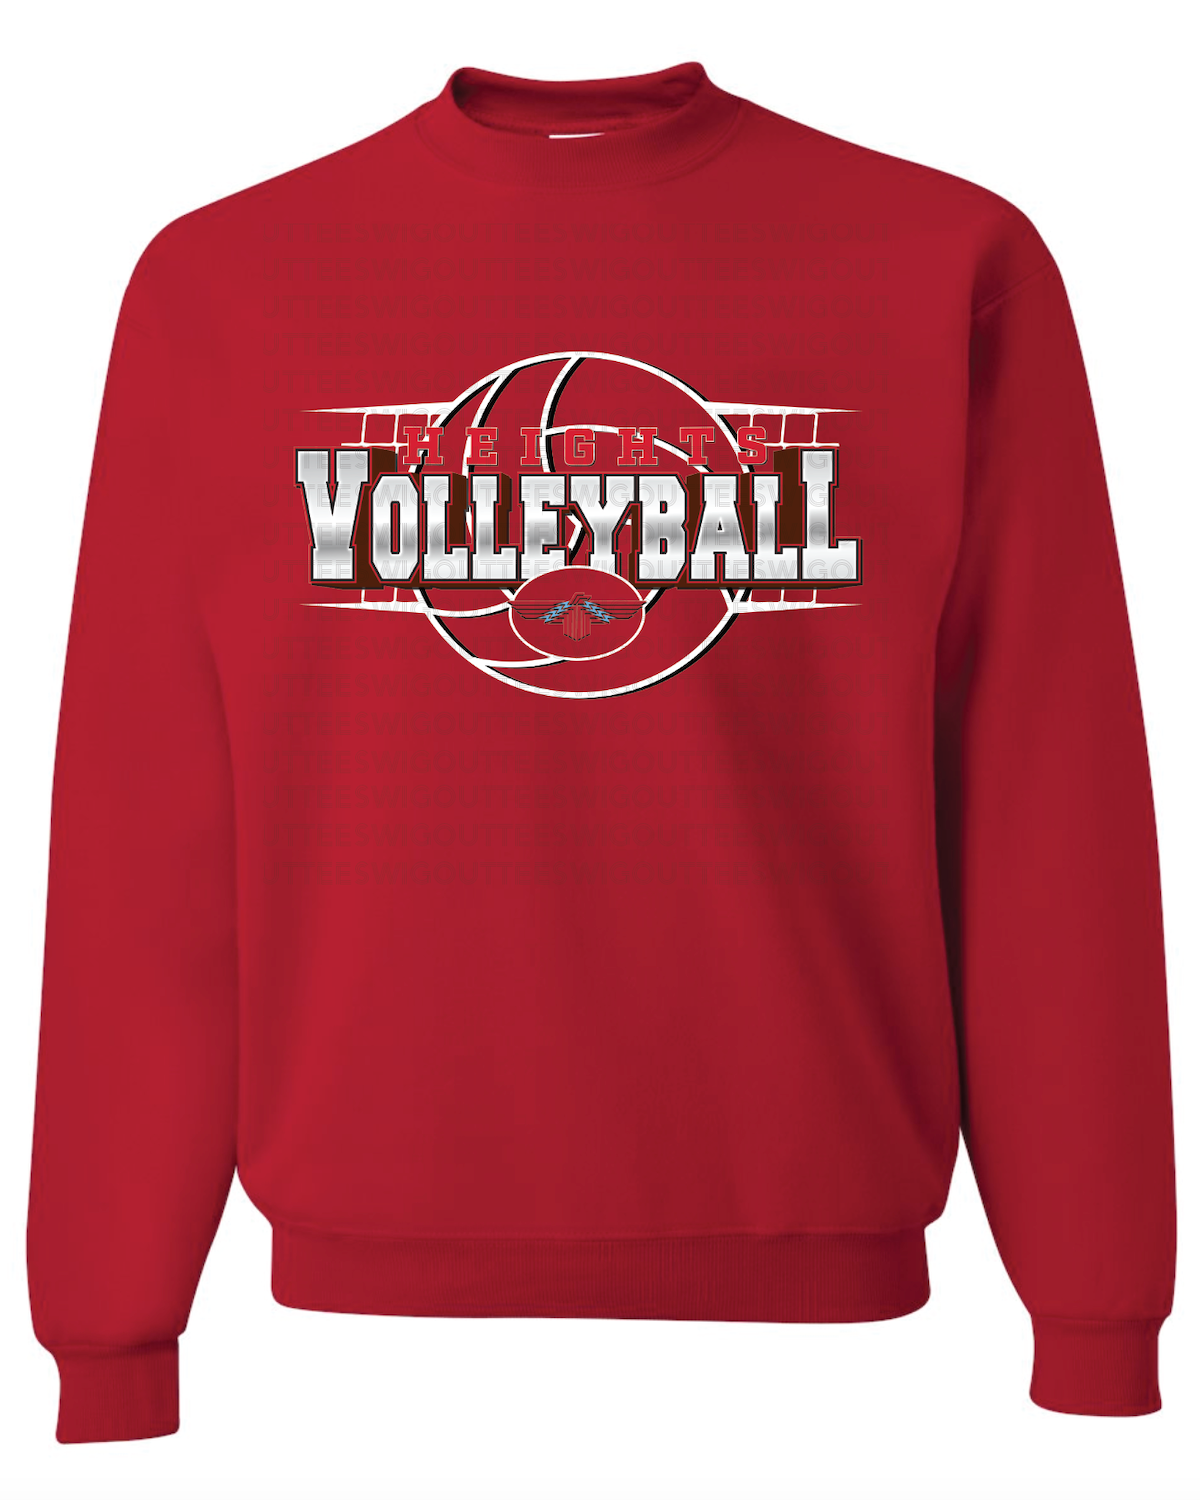 Heights Volleyball Jerzees Nublend Crew Sweatshirt